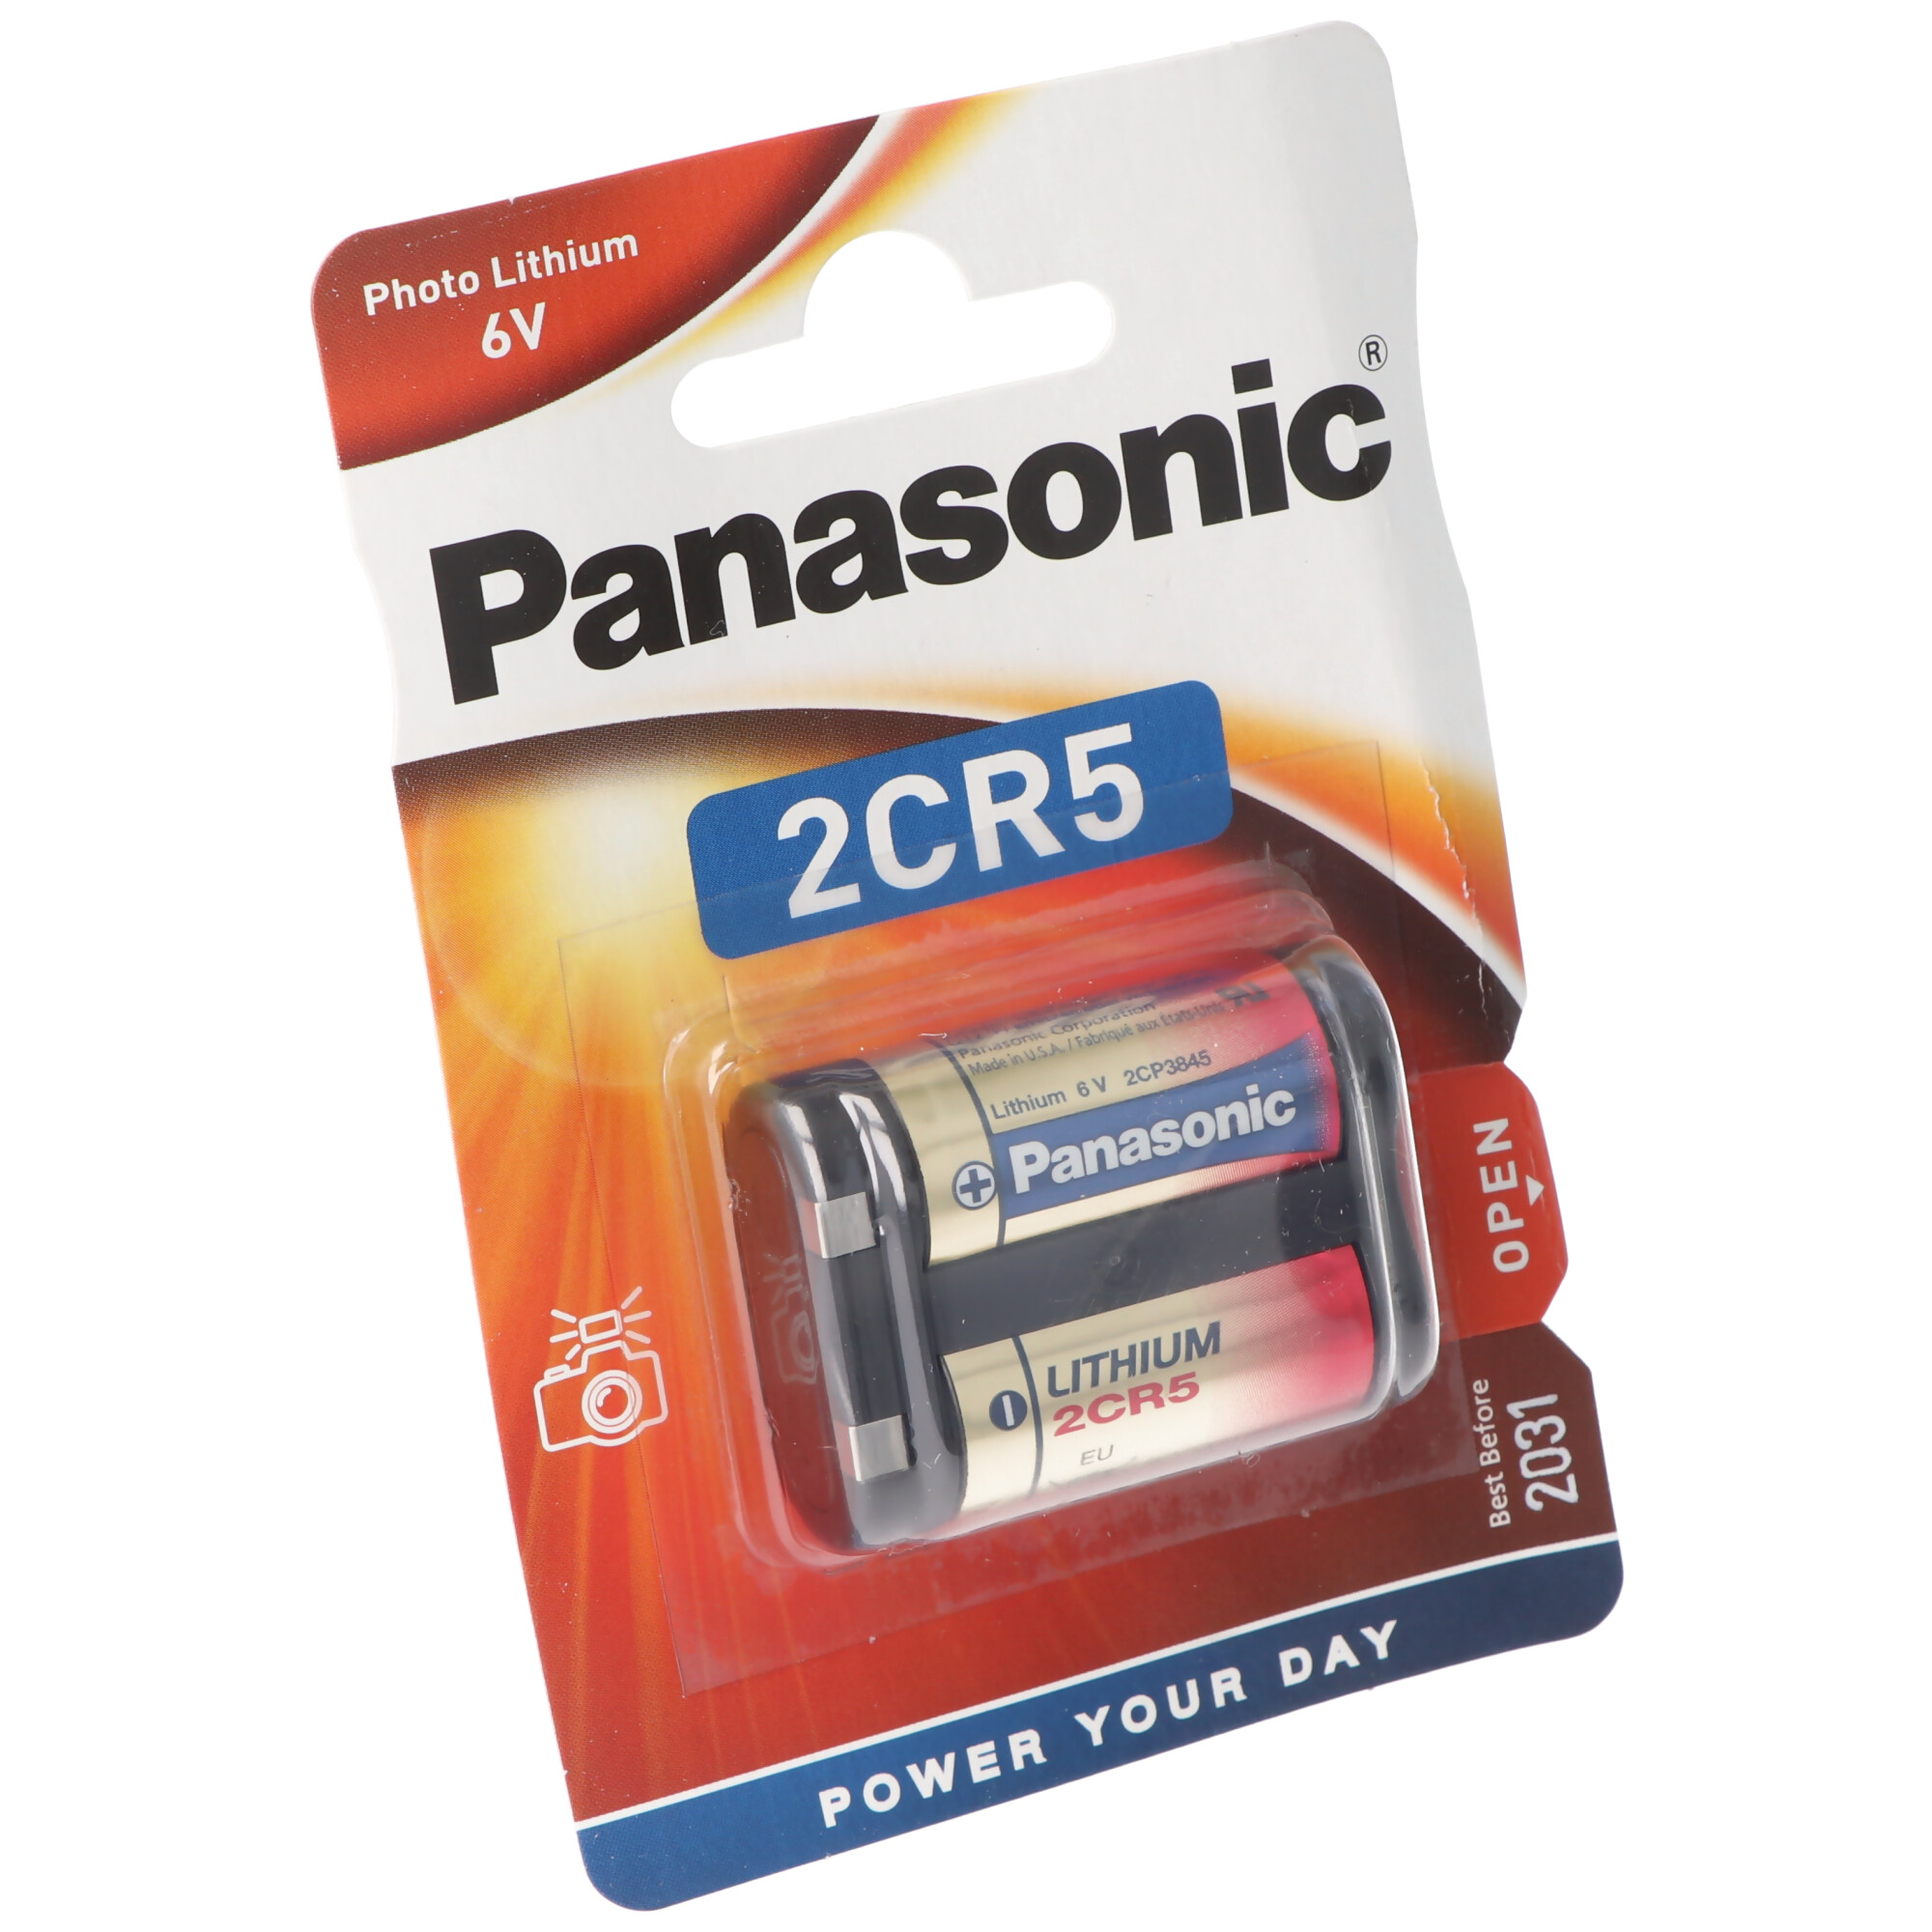 Panasonic 2CR5 Photo Lithium Batterie 2CR-5L, 2CR5M, 2CR-5MEP, 2B242599, 5410853017158